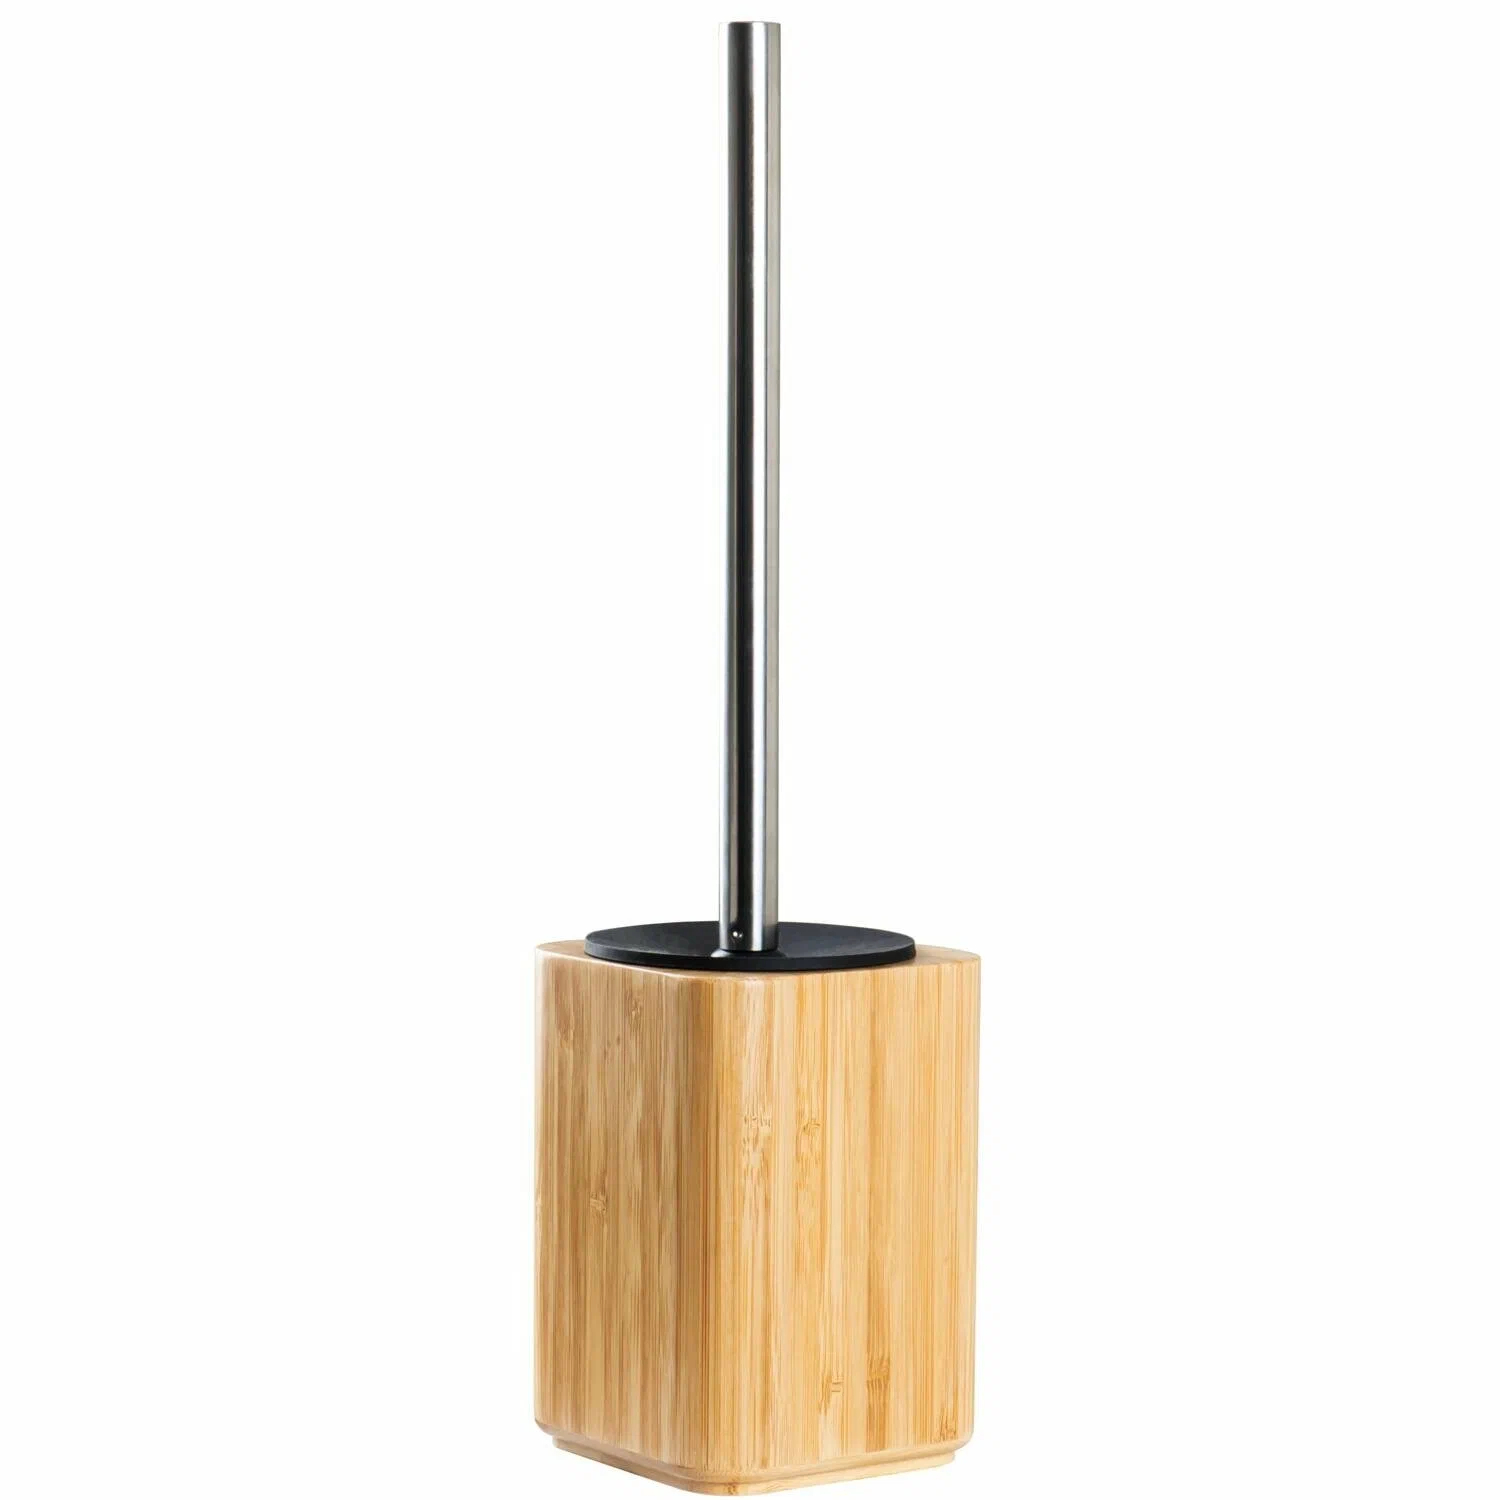 Ерш для унитаза Ridder Natural бамбук корзина мягкая 31x23x15 см 10 л бамбук коричневый